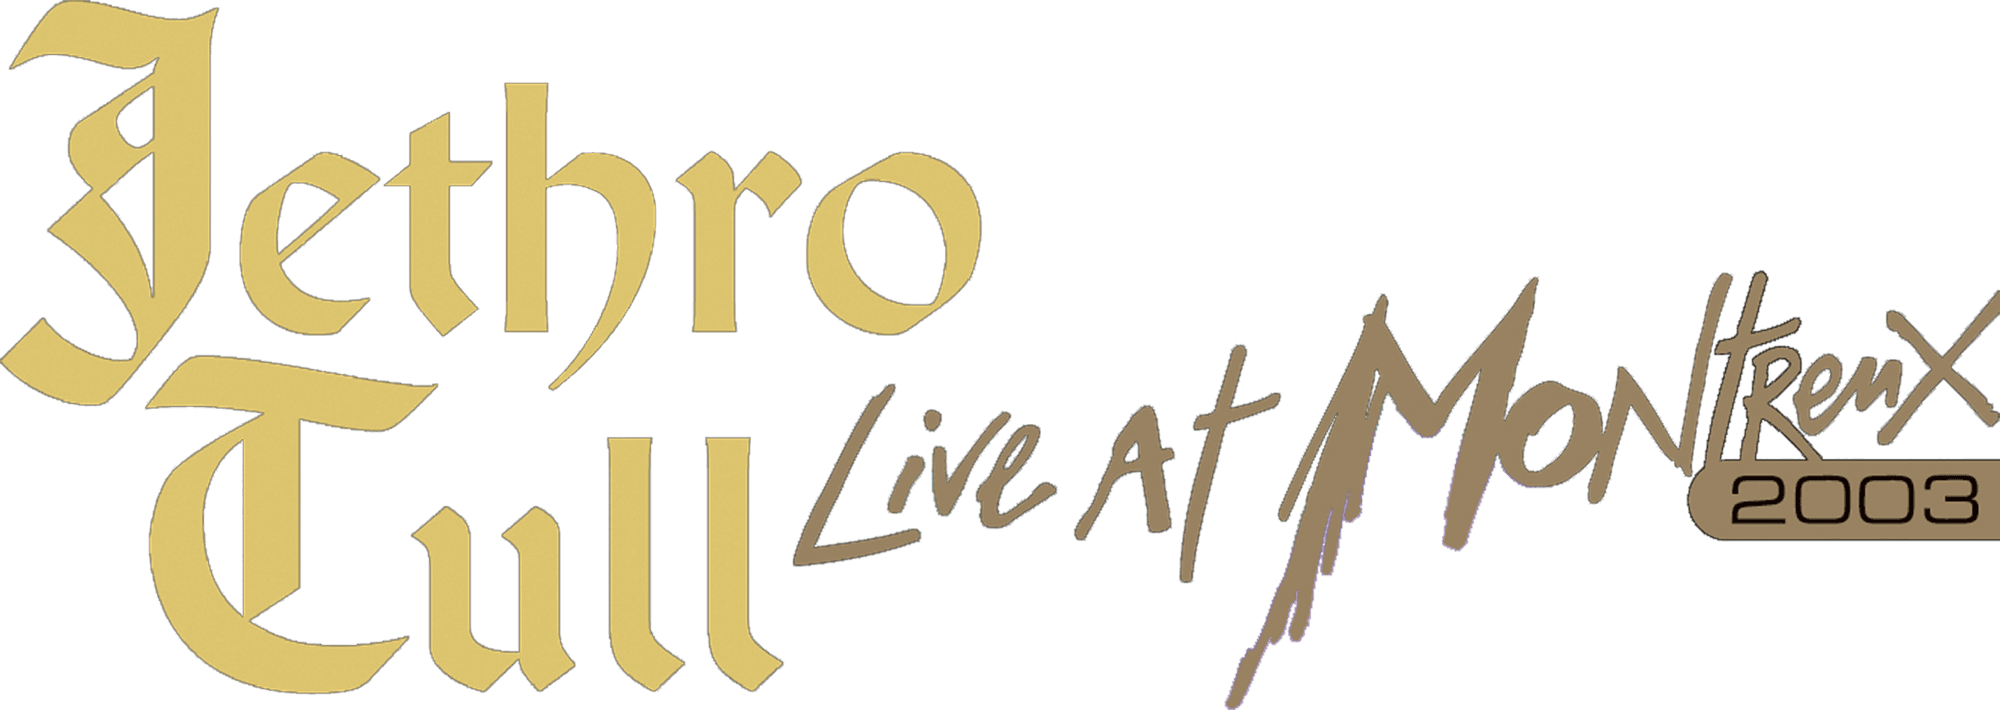 Jethro Tull: Live At Montreux 2003 logo